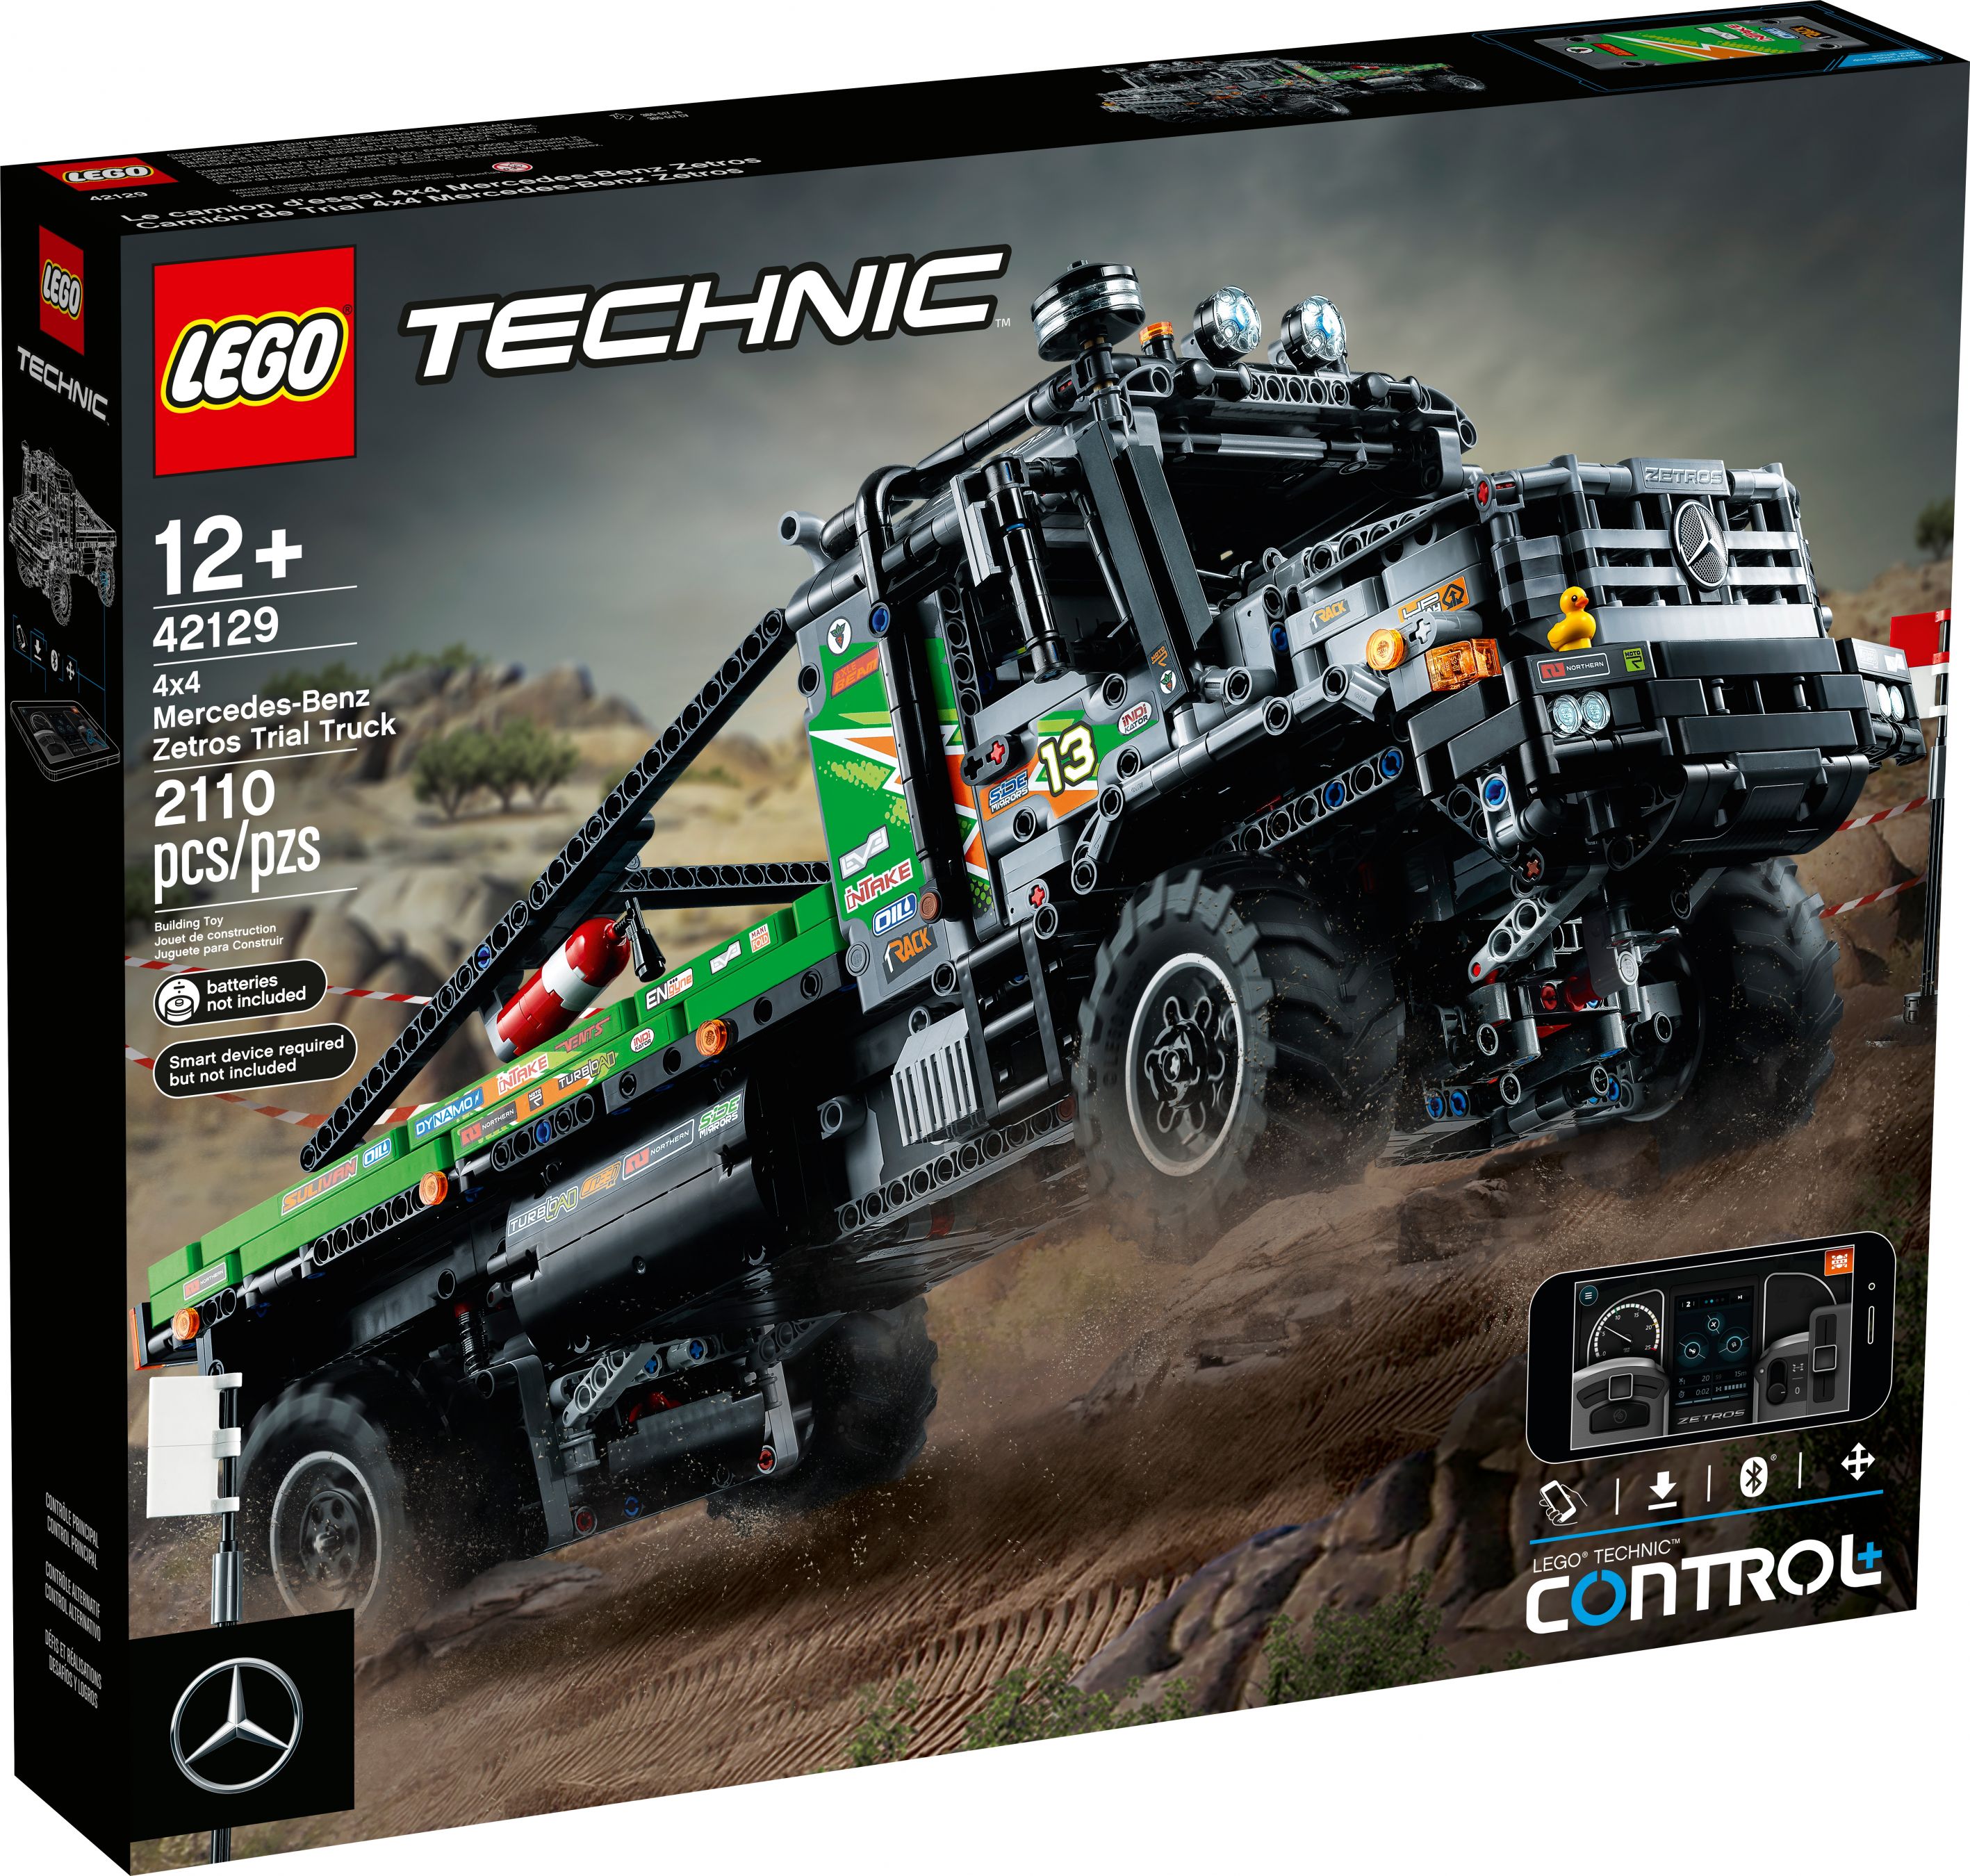 LEGO Technic 42129 4x4 Mercedes-Benz Zetros Offroad-Truck LEGO_42129_alt1.jpg